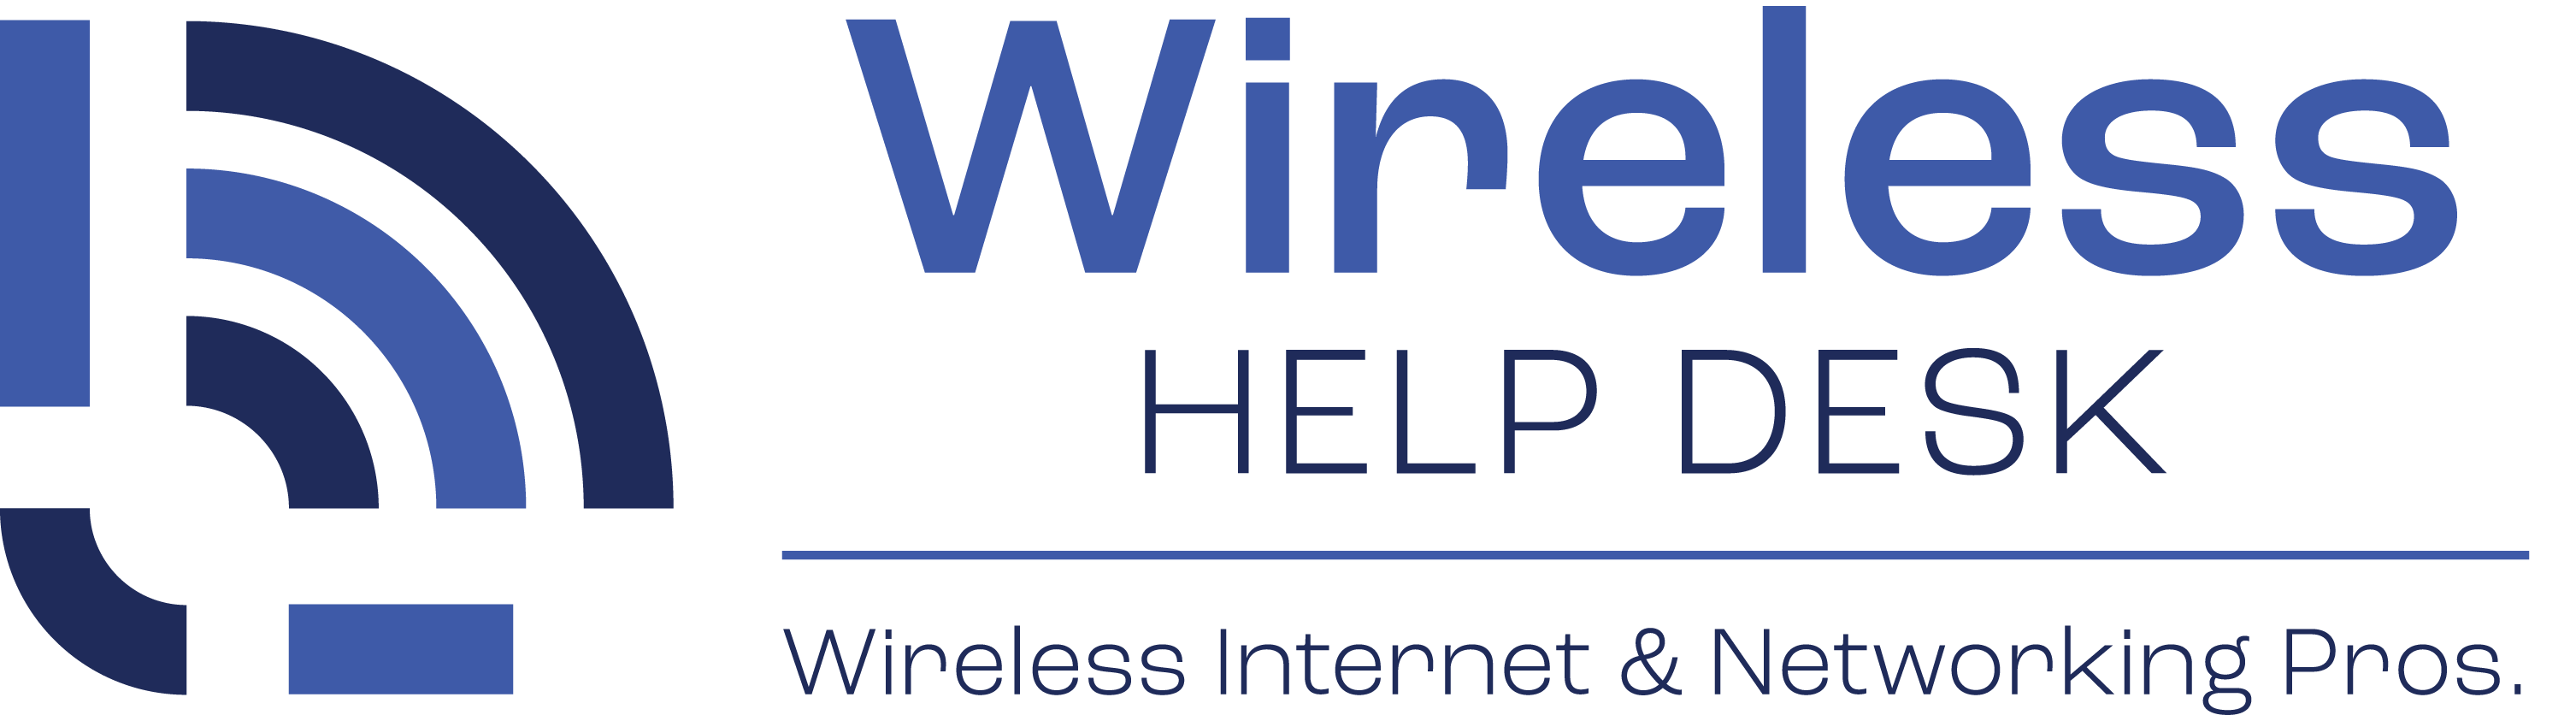 Wireless Helpdesk